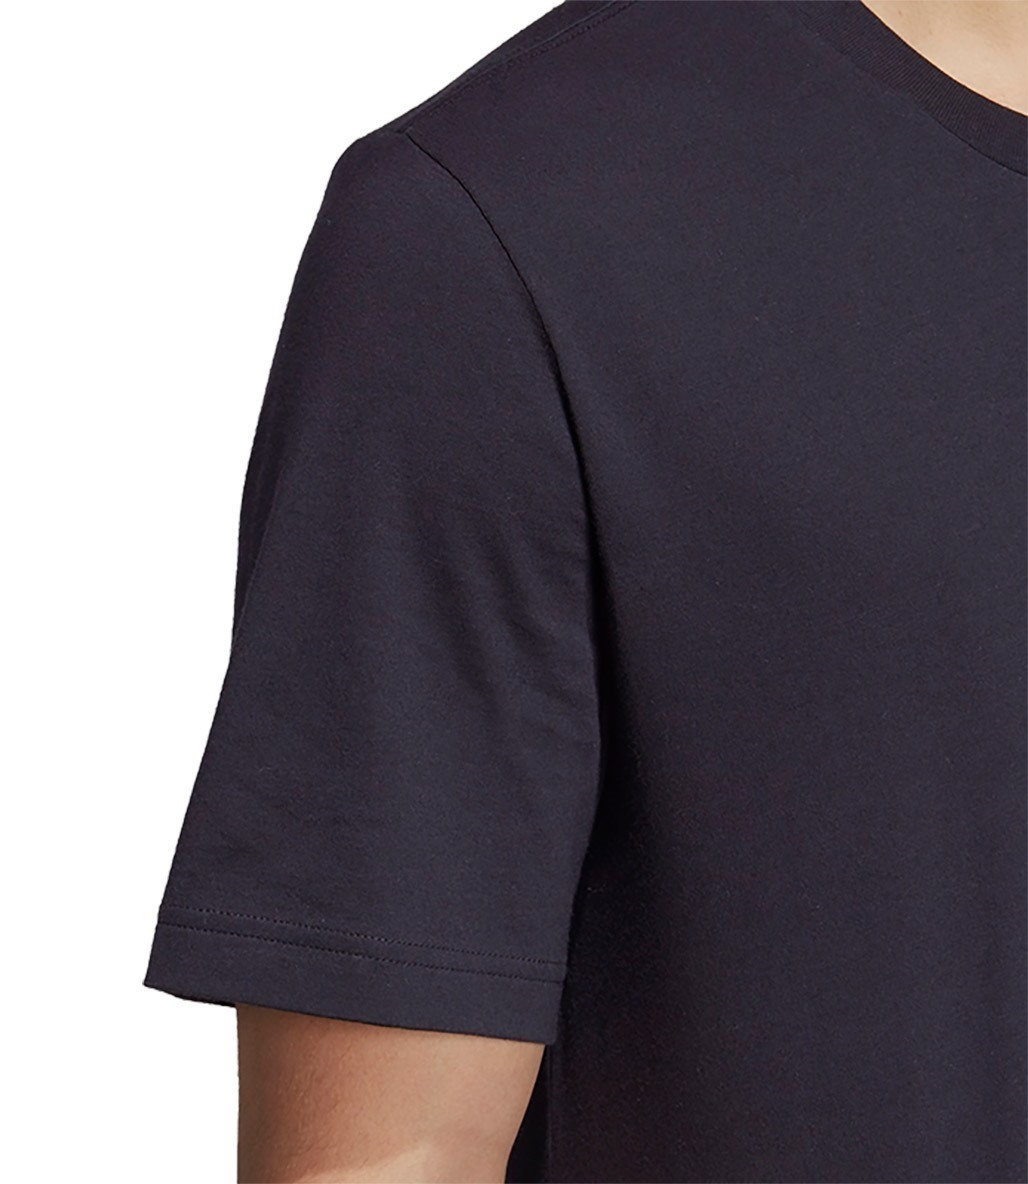 Adidas Essentials Plain T-Shirt Siyah